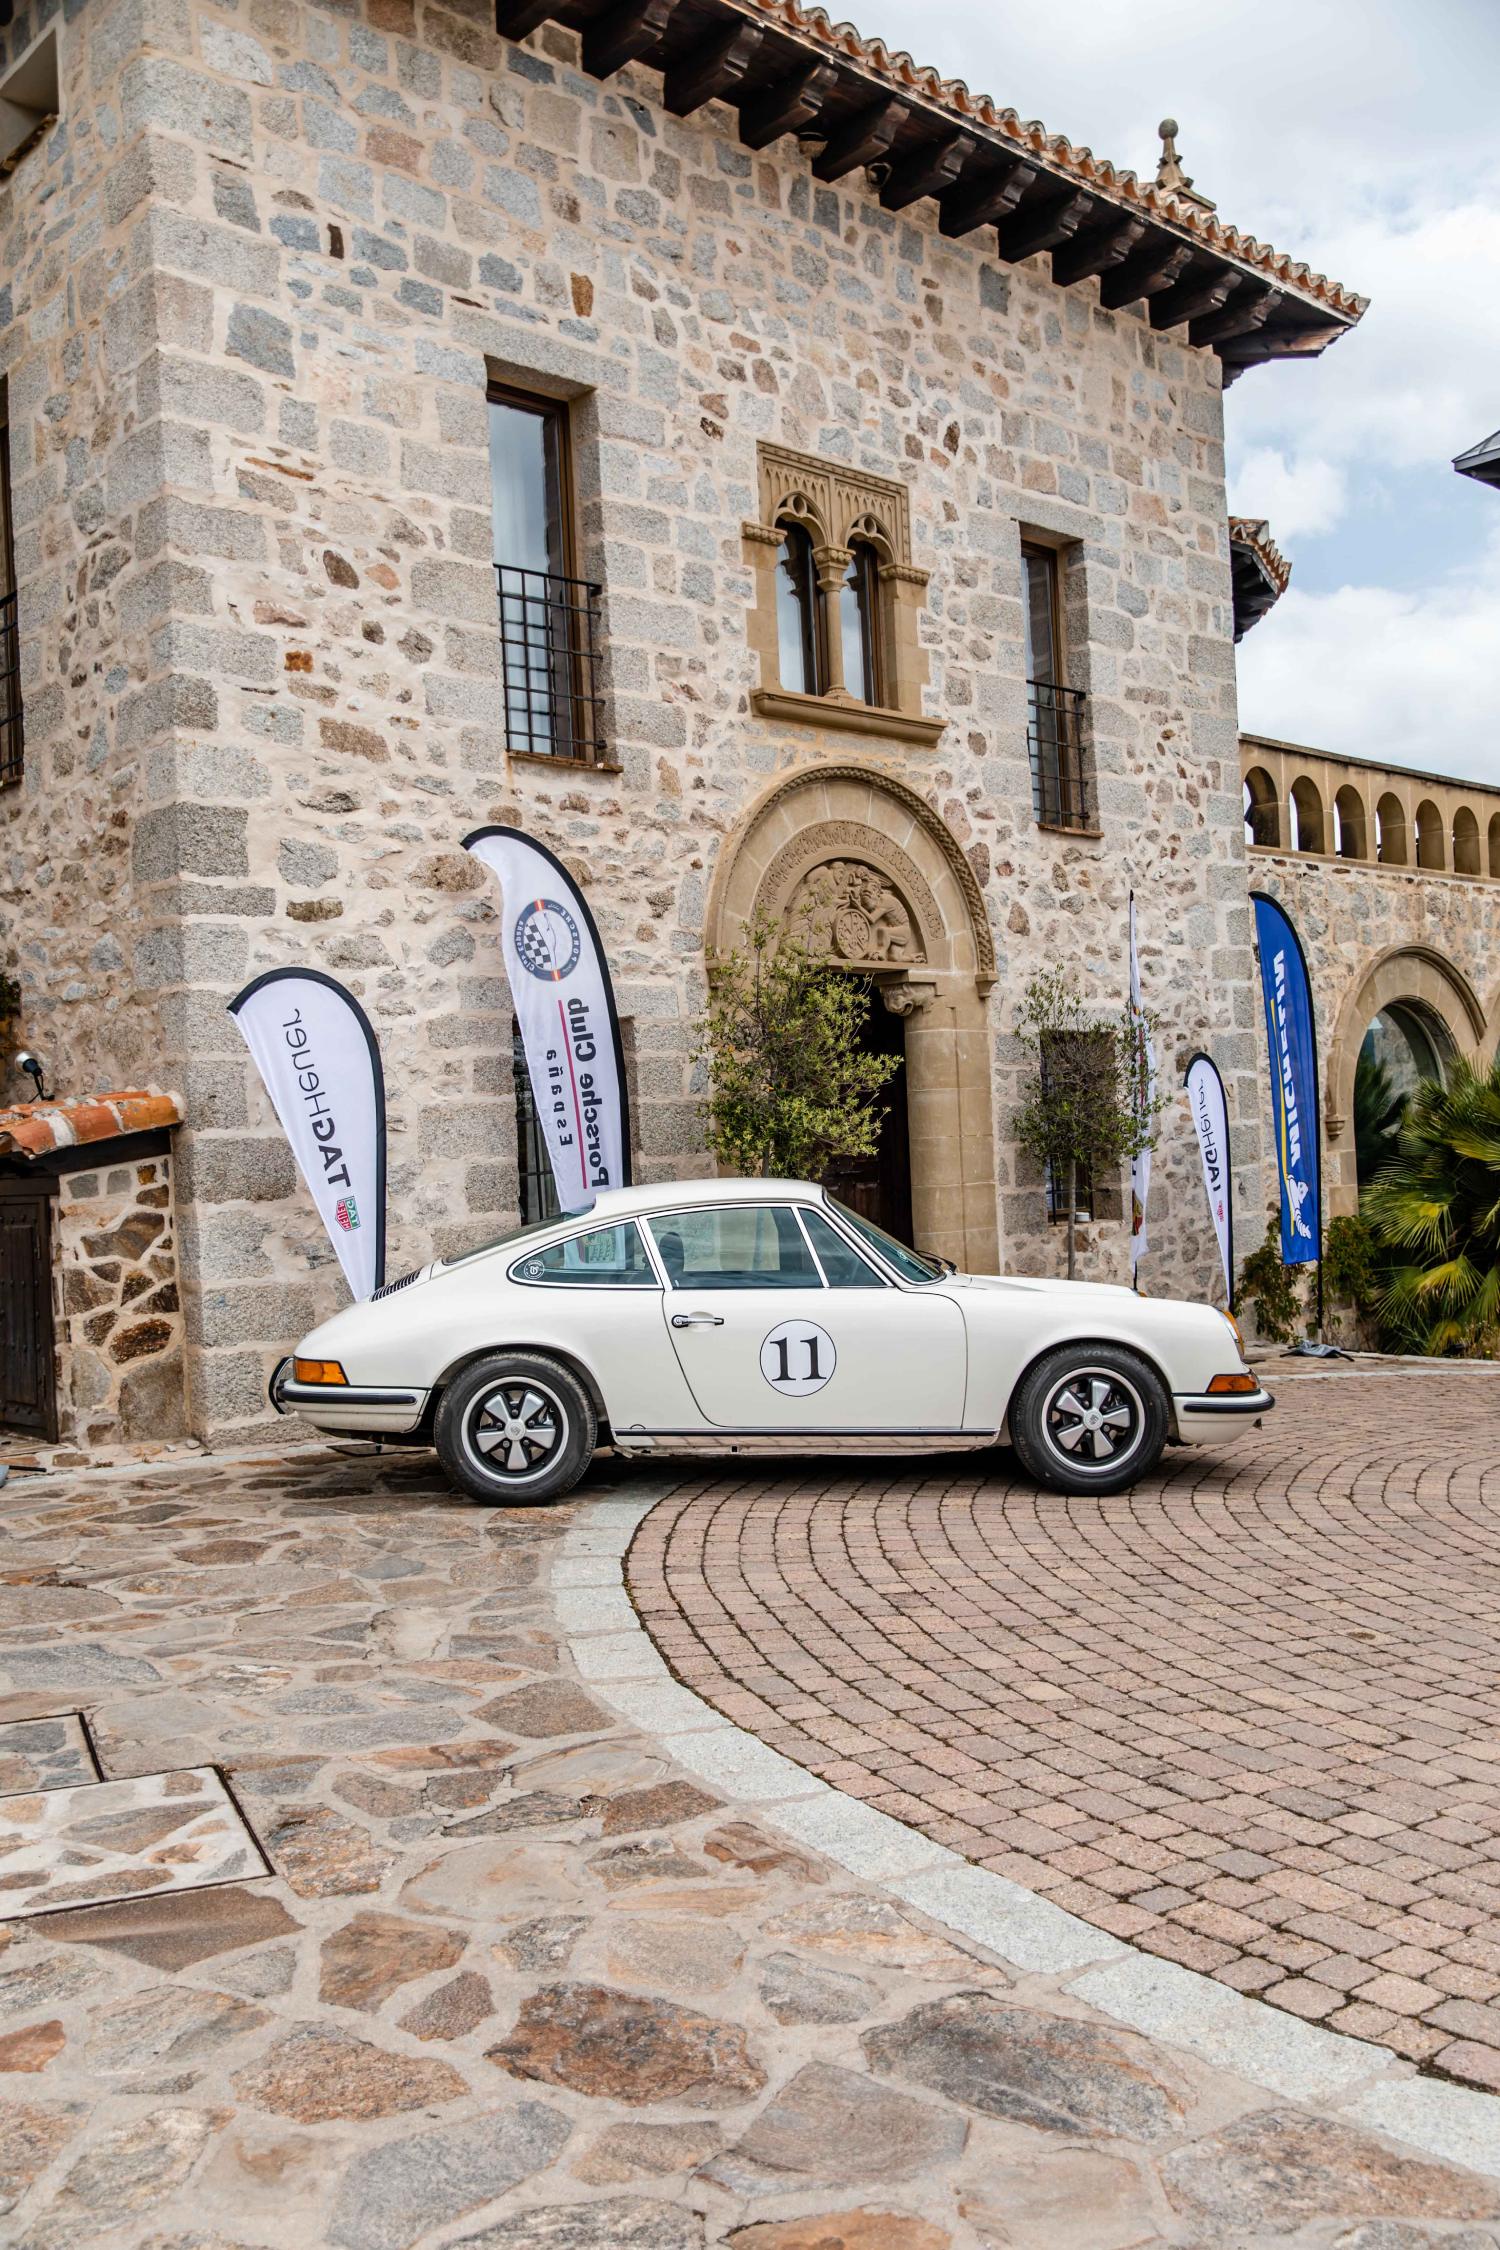 40-Aniversario-Club-Porsche-Espana-14 SemanalClásico - Revista online de coches clásicos, de colección y sport - Porsche